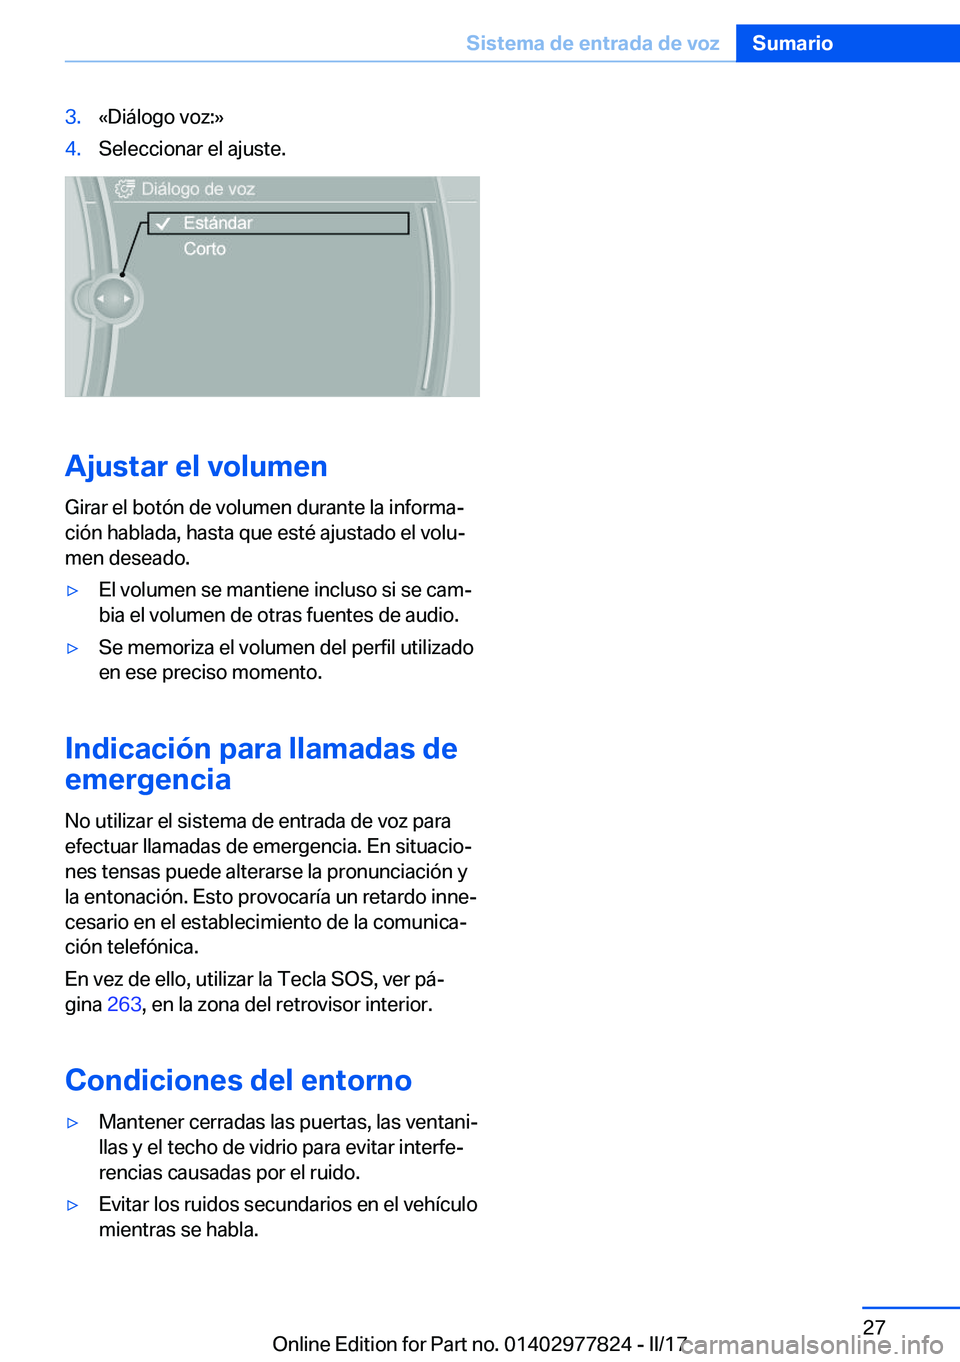 BMW X3 2017  Manuales de Empleo (in Spanish) �3�.�«�D�i�á�l�o�g�o� �v�o�z�:�{�4�.�S�e�l�e�c�c�i�o�n�a�r� �e�l� �a�j�u�s�t�e�.
�A�j�u�s�t�a�r��e�l��v�o�l�u�m�e�n�G�i�r�a�r� �e�l� �b�o�t�